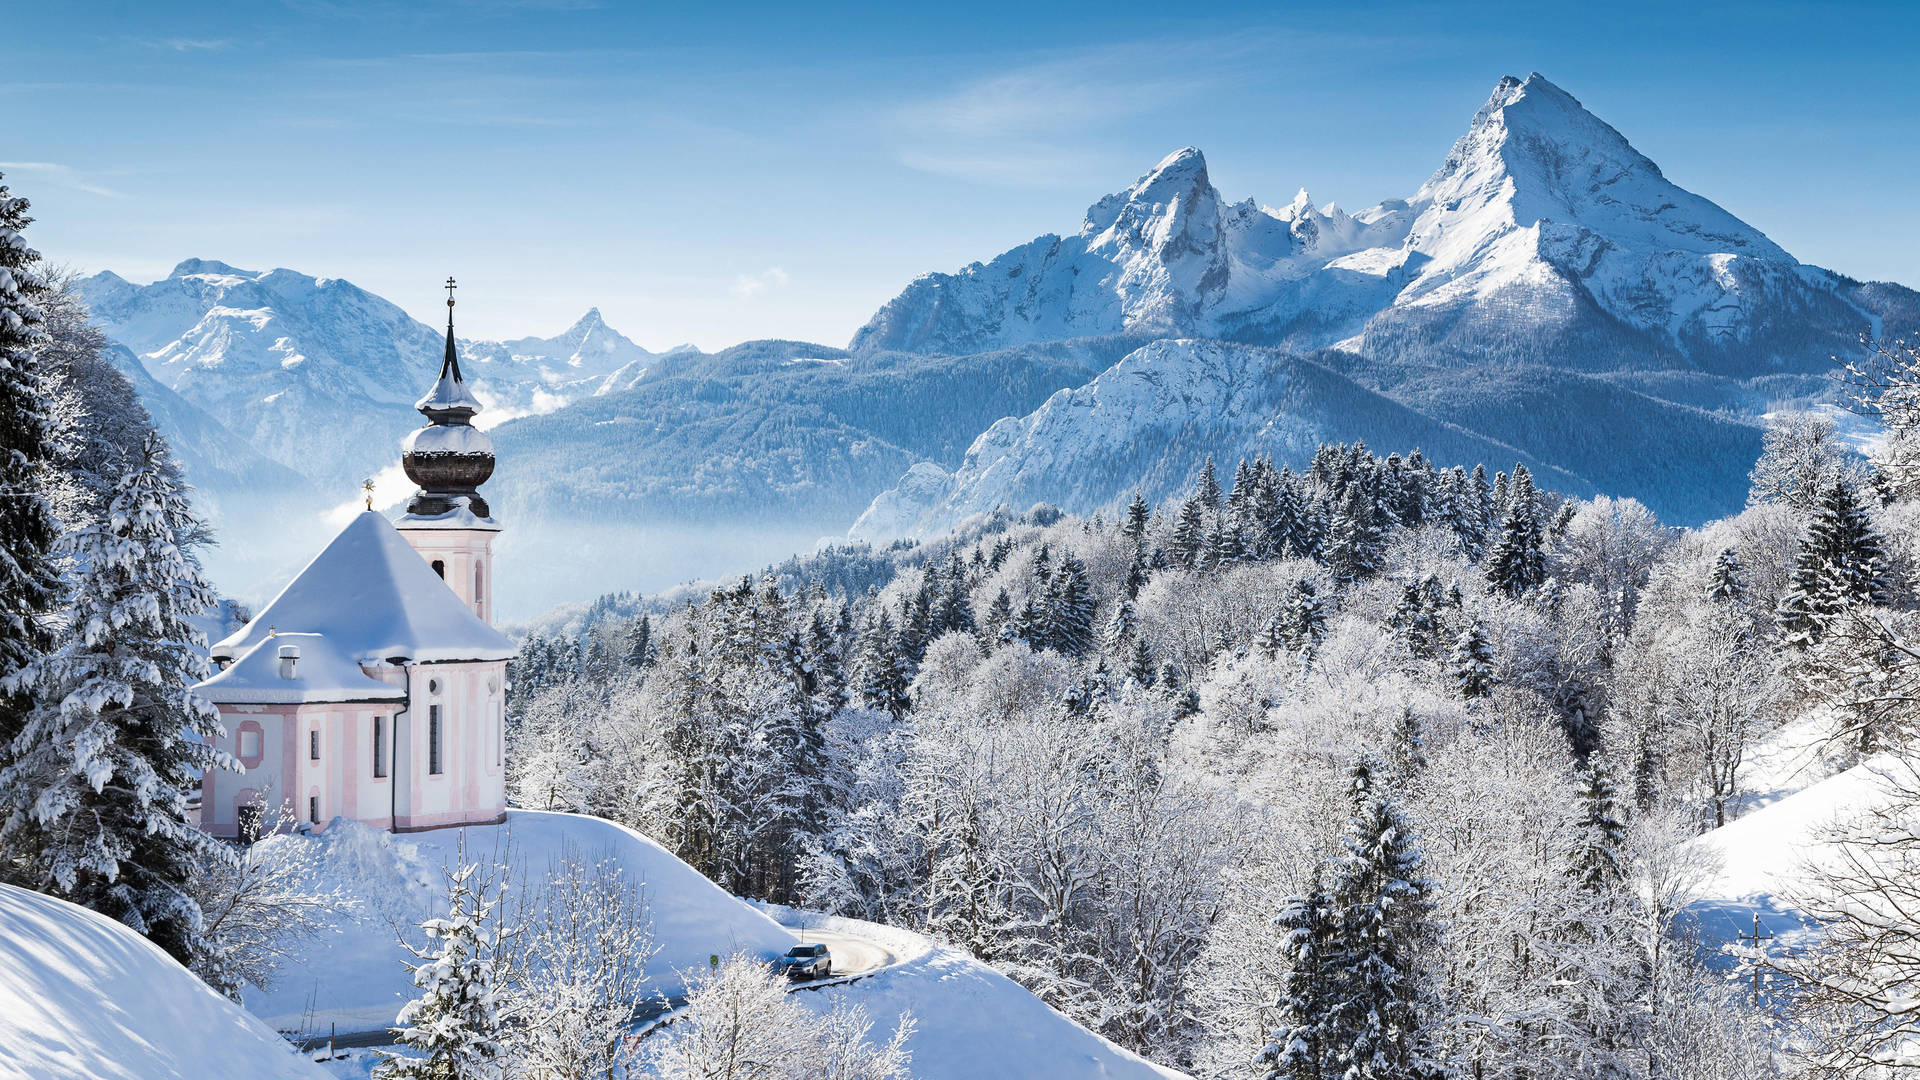 Bavarian Alps Snow Mountain In Winter Wallpaper